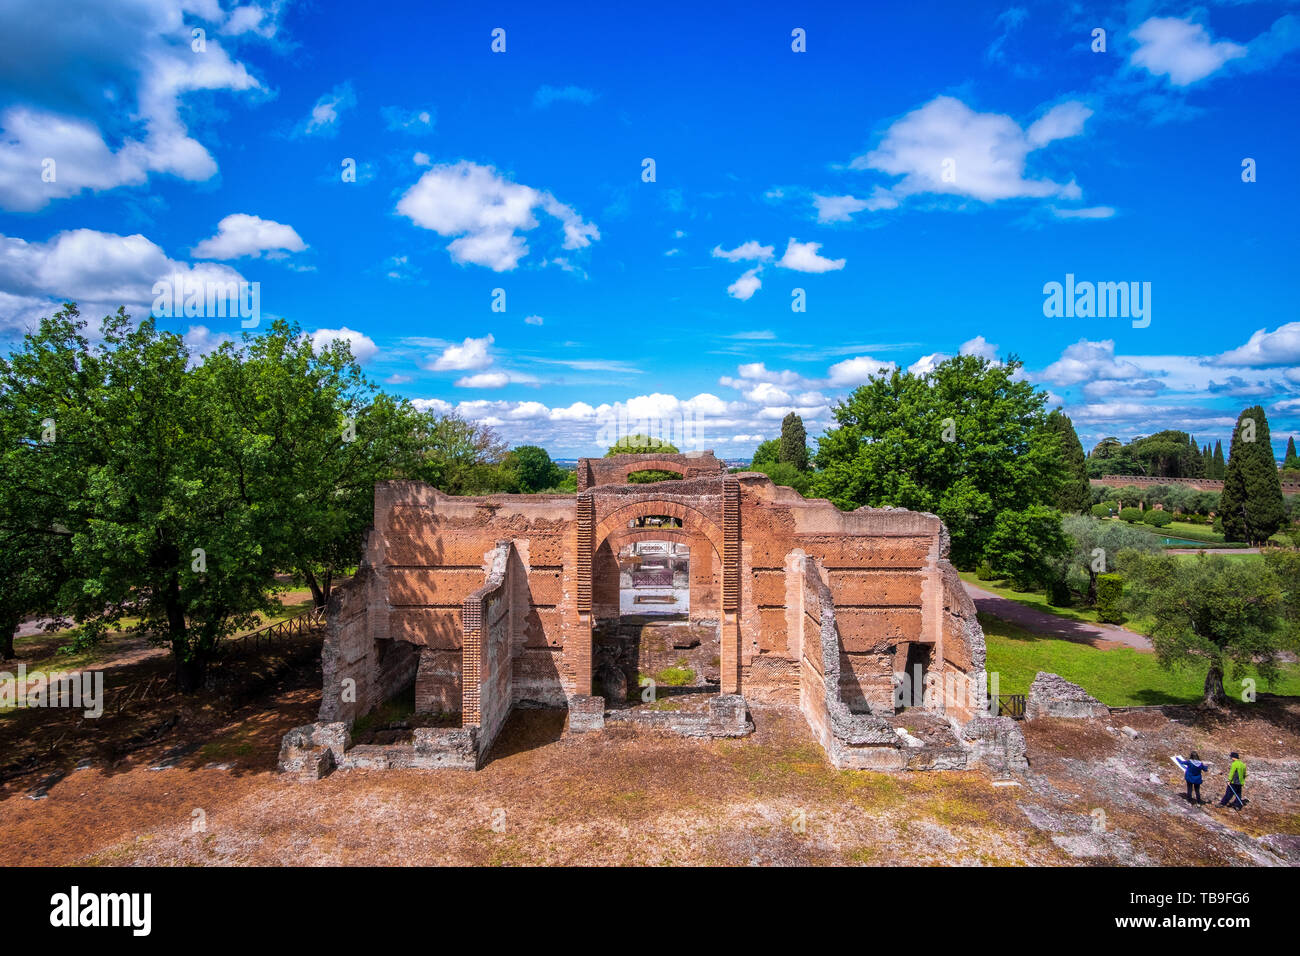 Tivoli - Villa Adriana cultural Rome tour- archaeological landmark in Italy aerial view of the Three Exedras building . Stock Photo